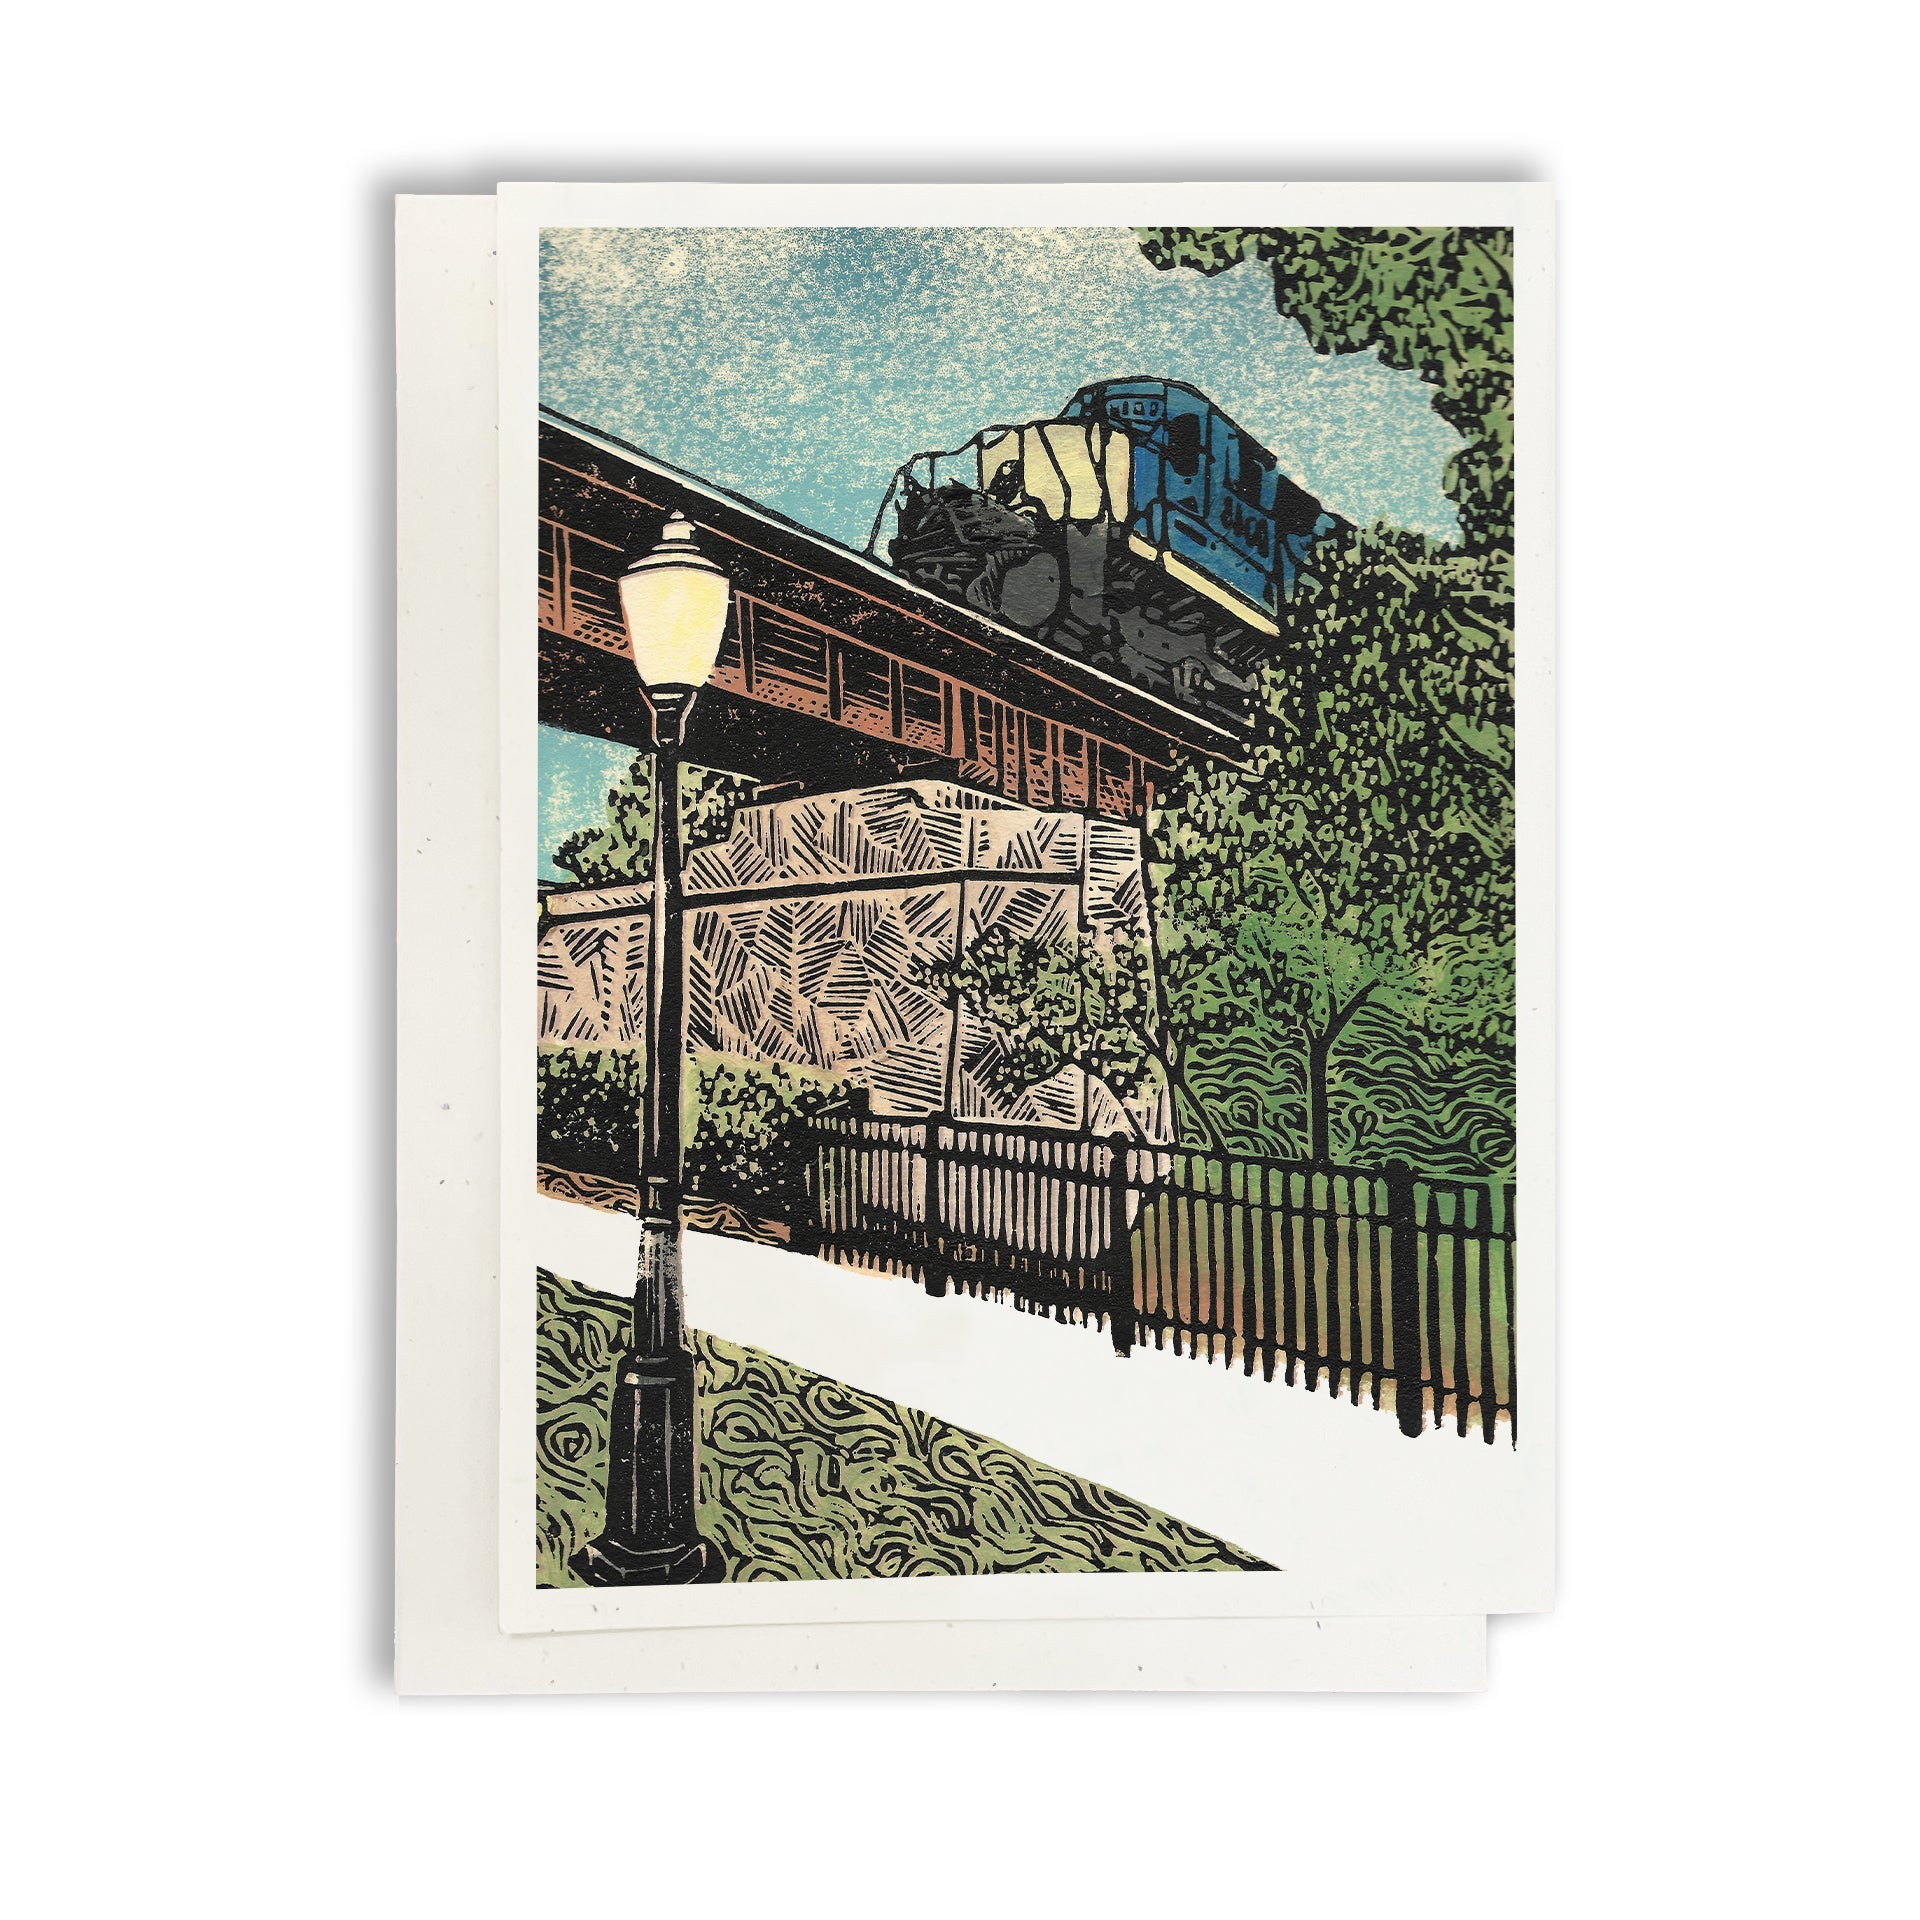 Milford Train Blank Greeting Card. A casually elegant card featuring Milford, Michigan, art by Natalia Wohletz of Peninsula Prints.